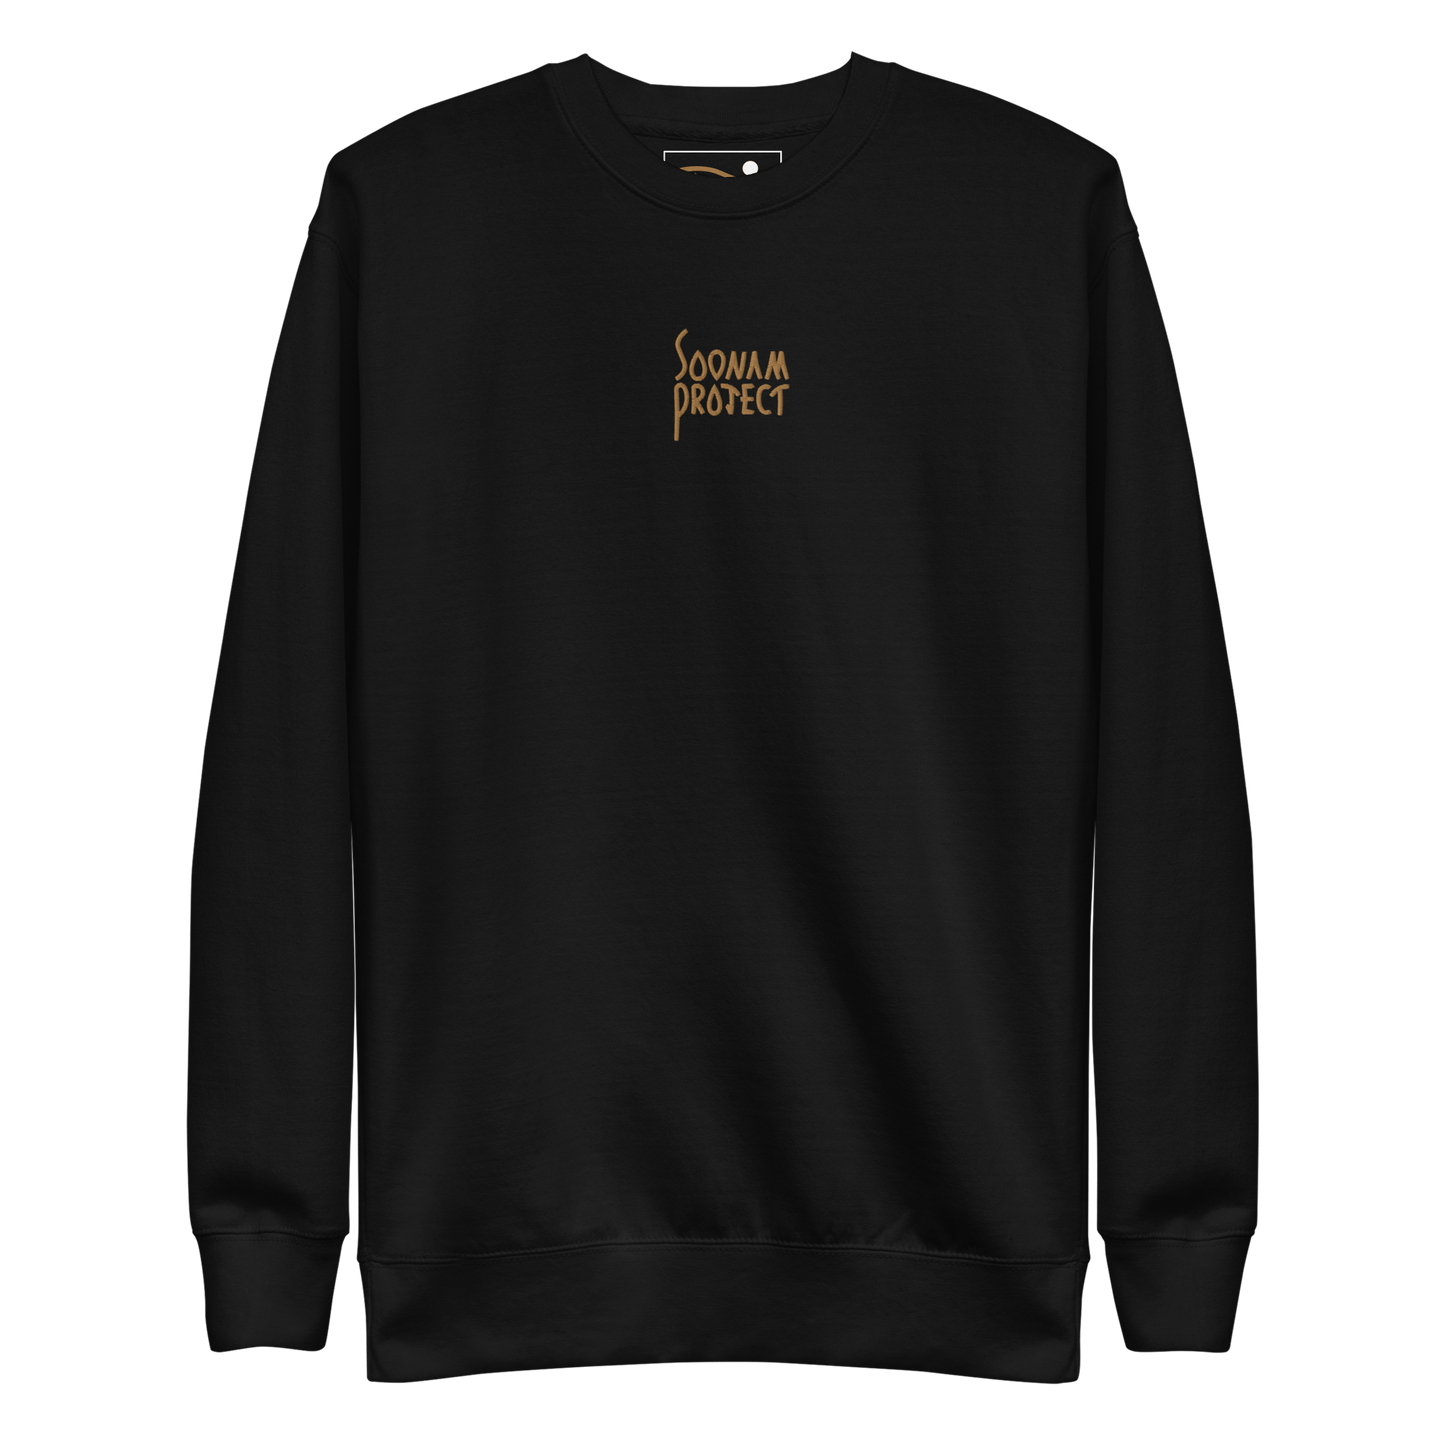 Soonam Project - Sweatshirt